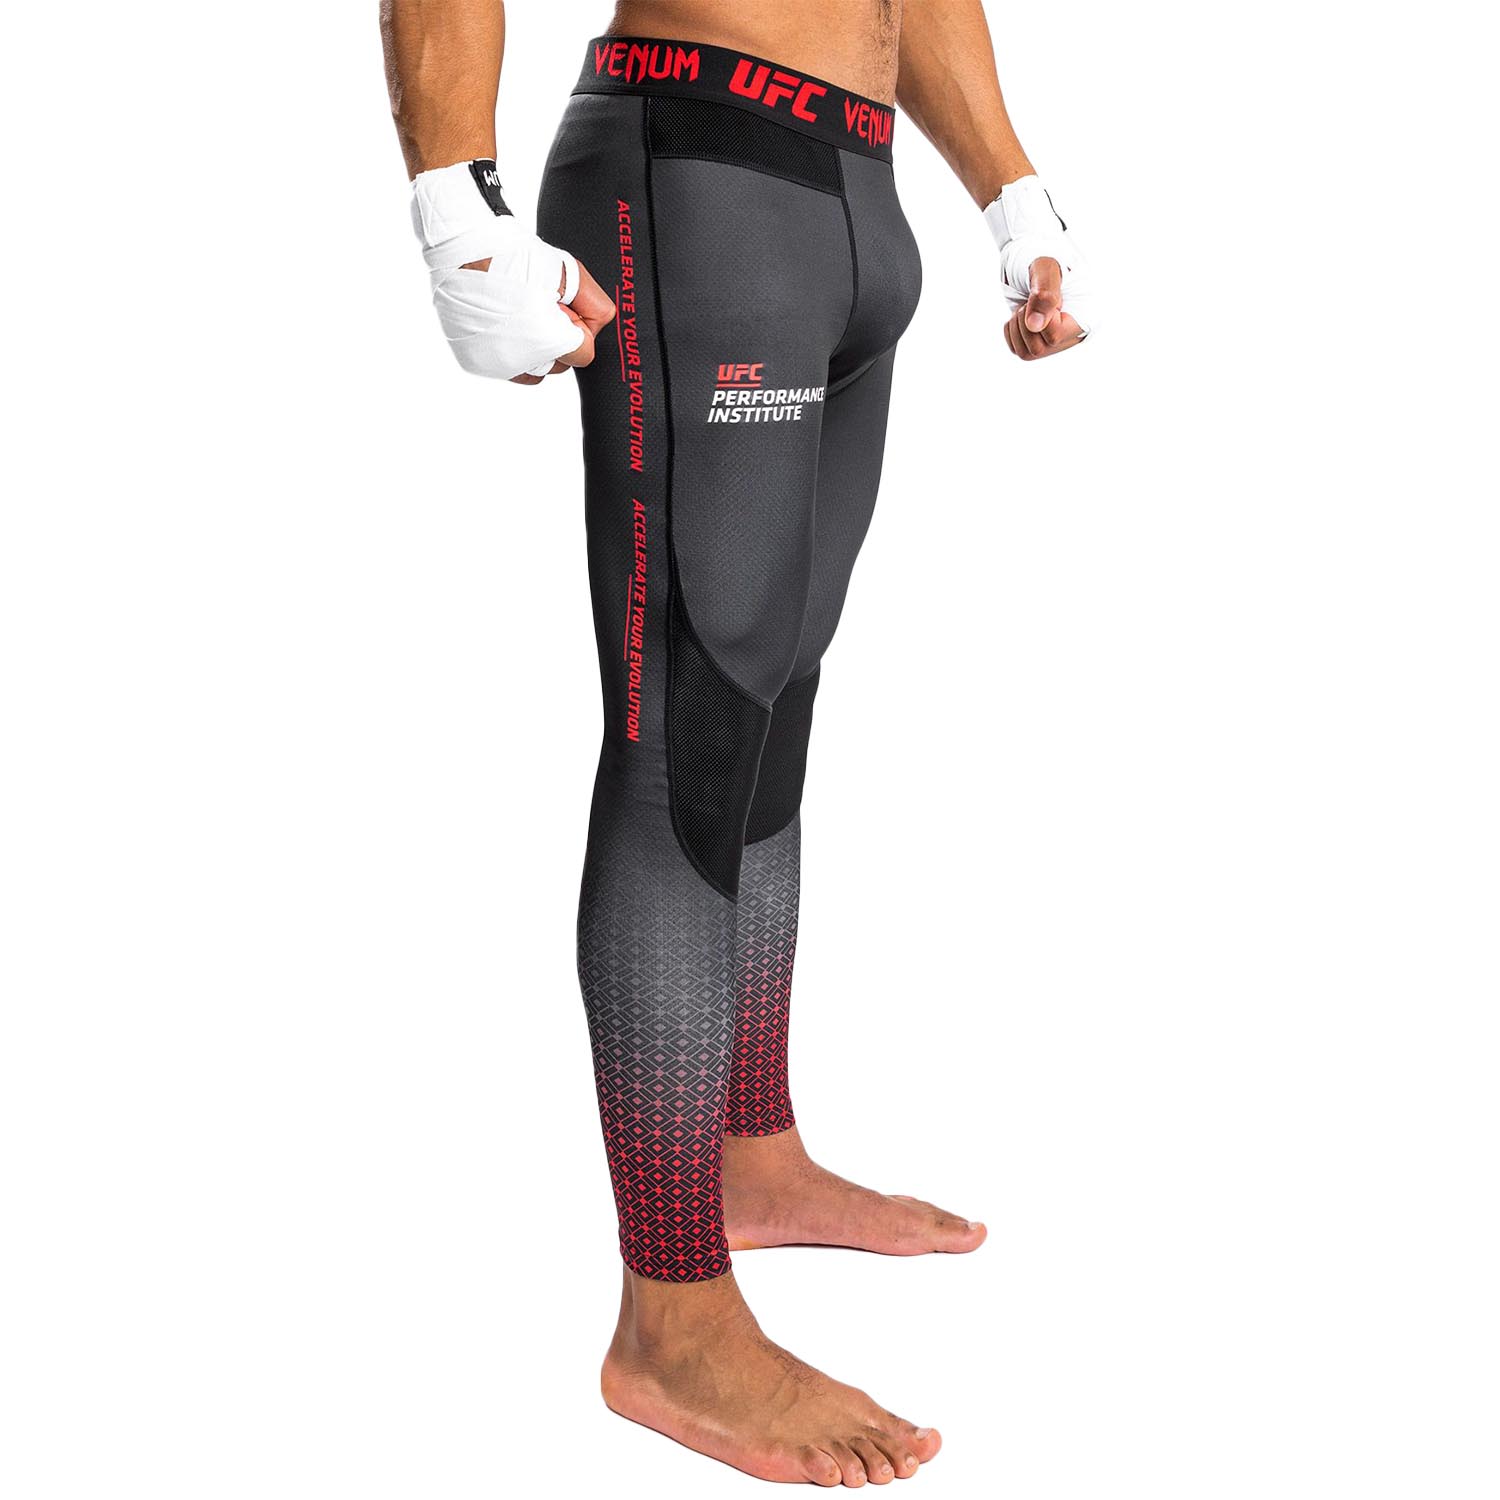 VENUM Compression Pants, UFC Performance Institute, schwarz-rot